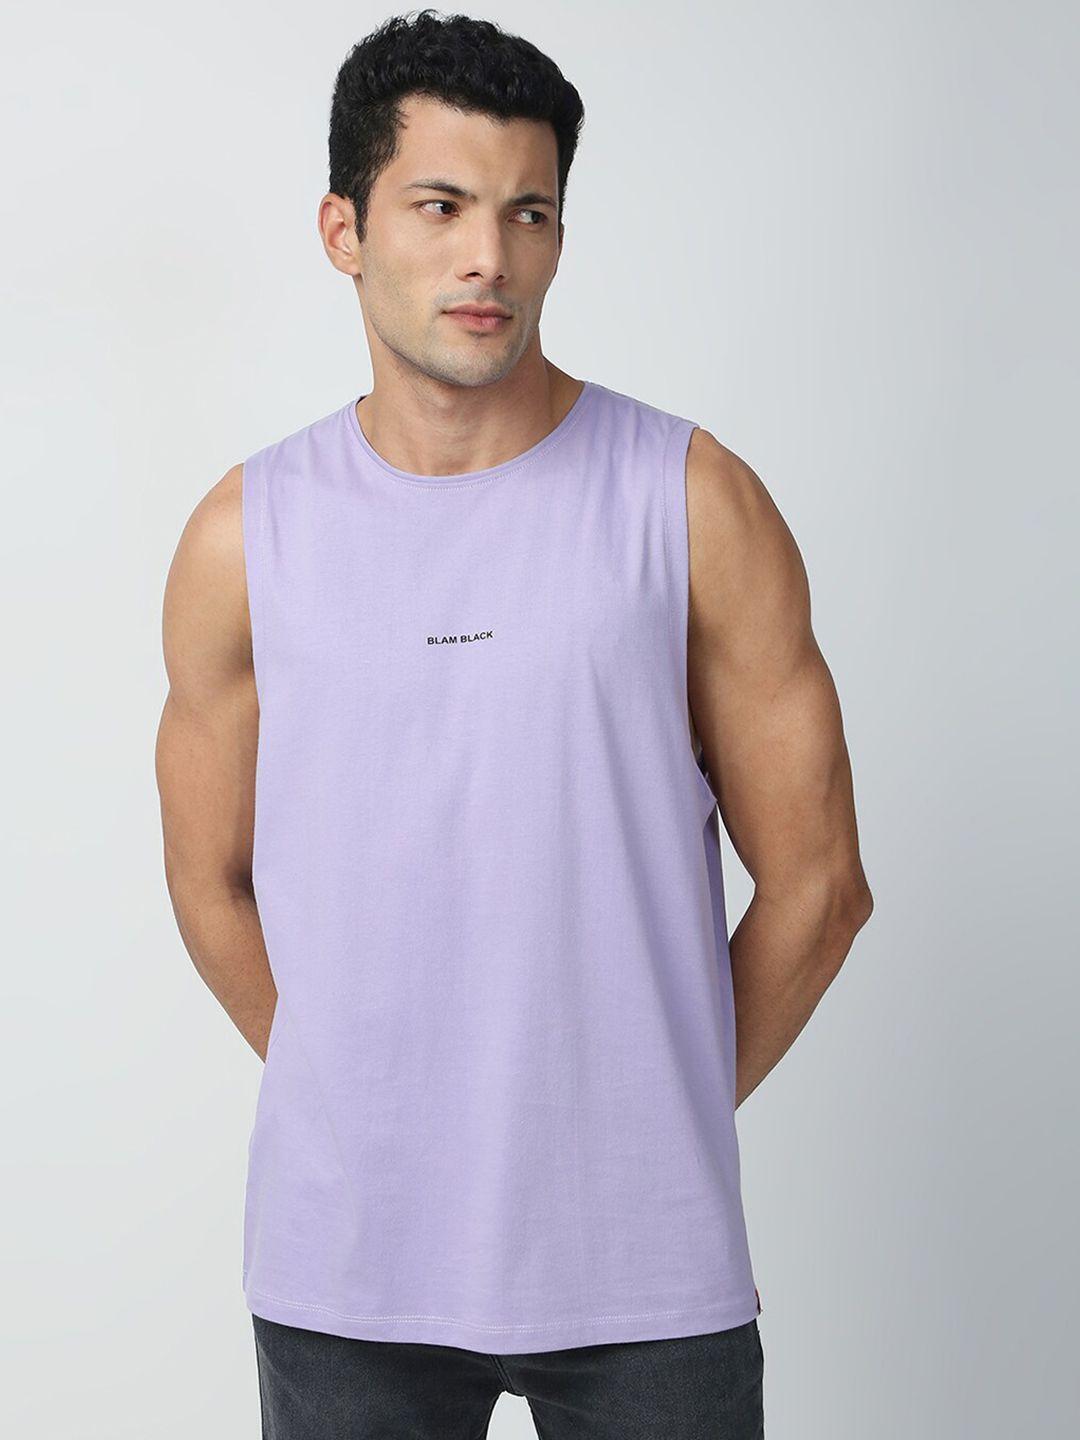 blamblack men lavender t-shirt